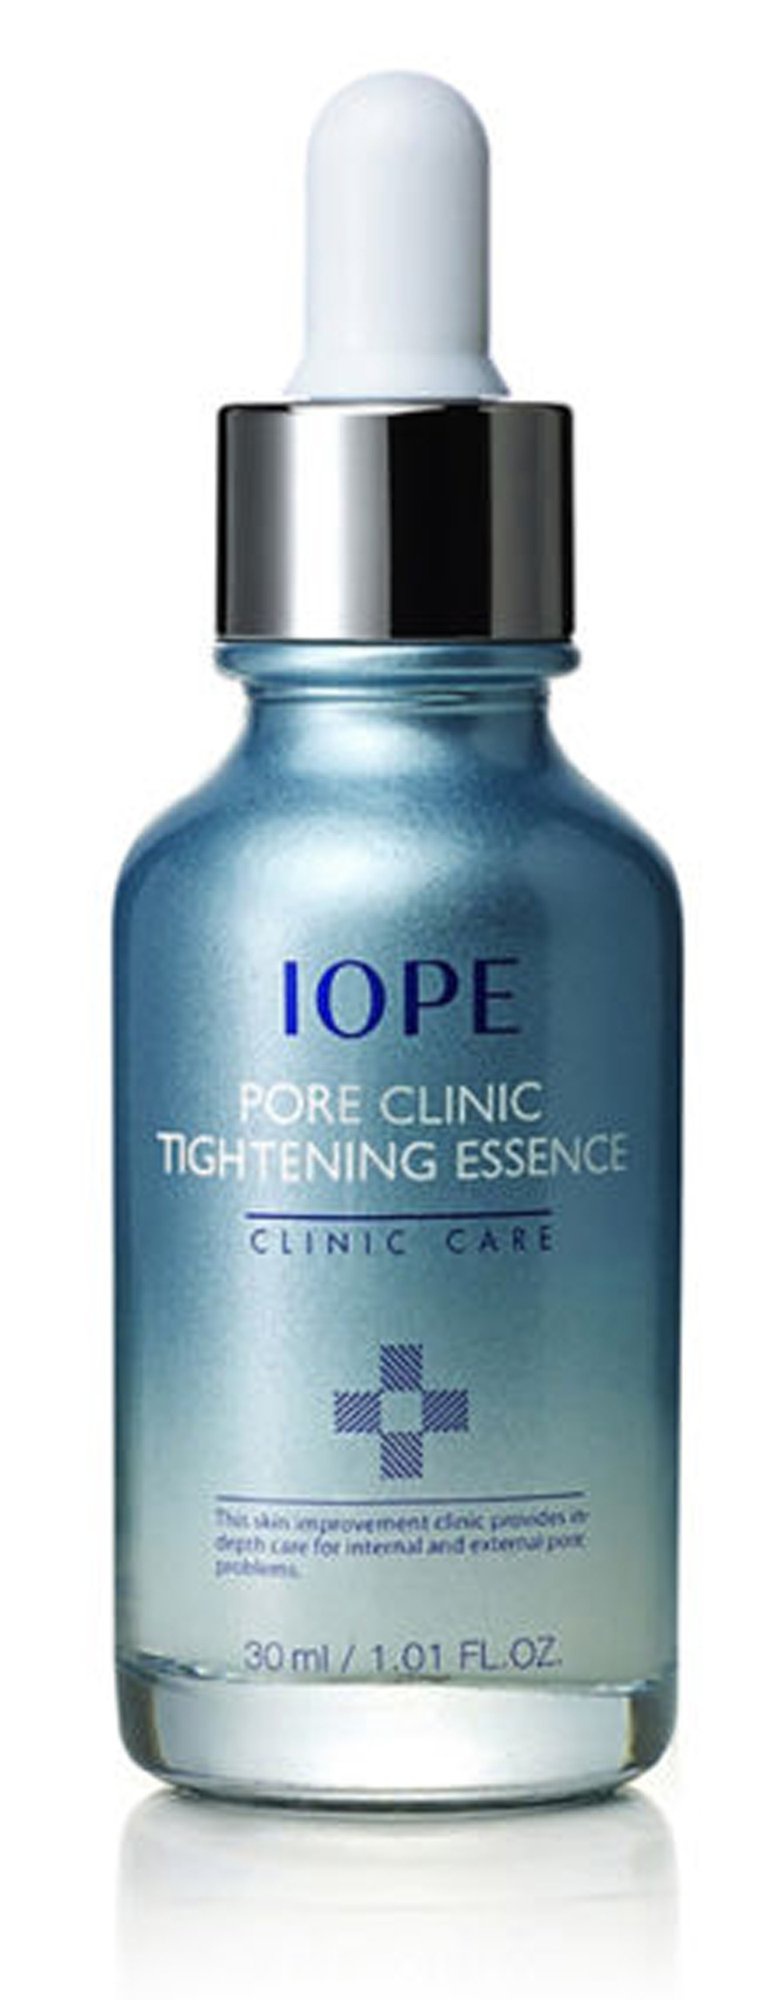 IOPE Pore Clinic Tightening Essence